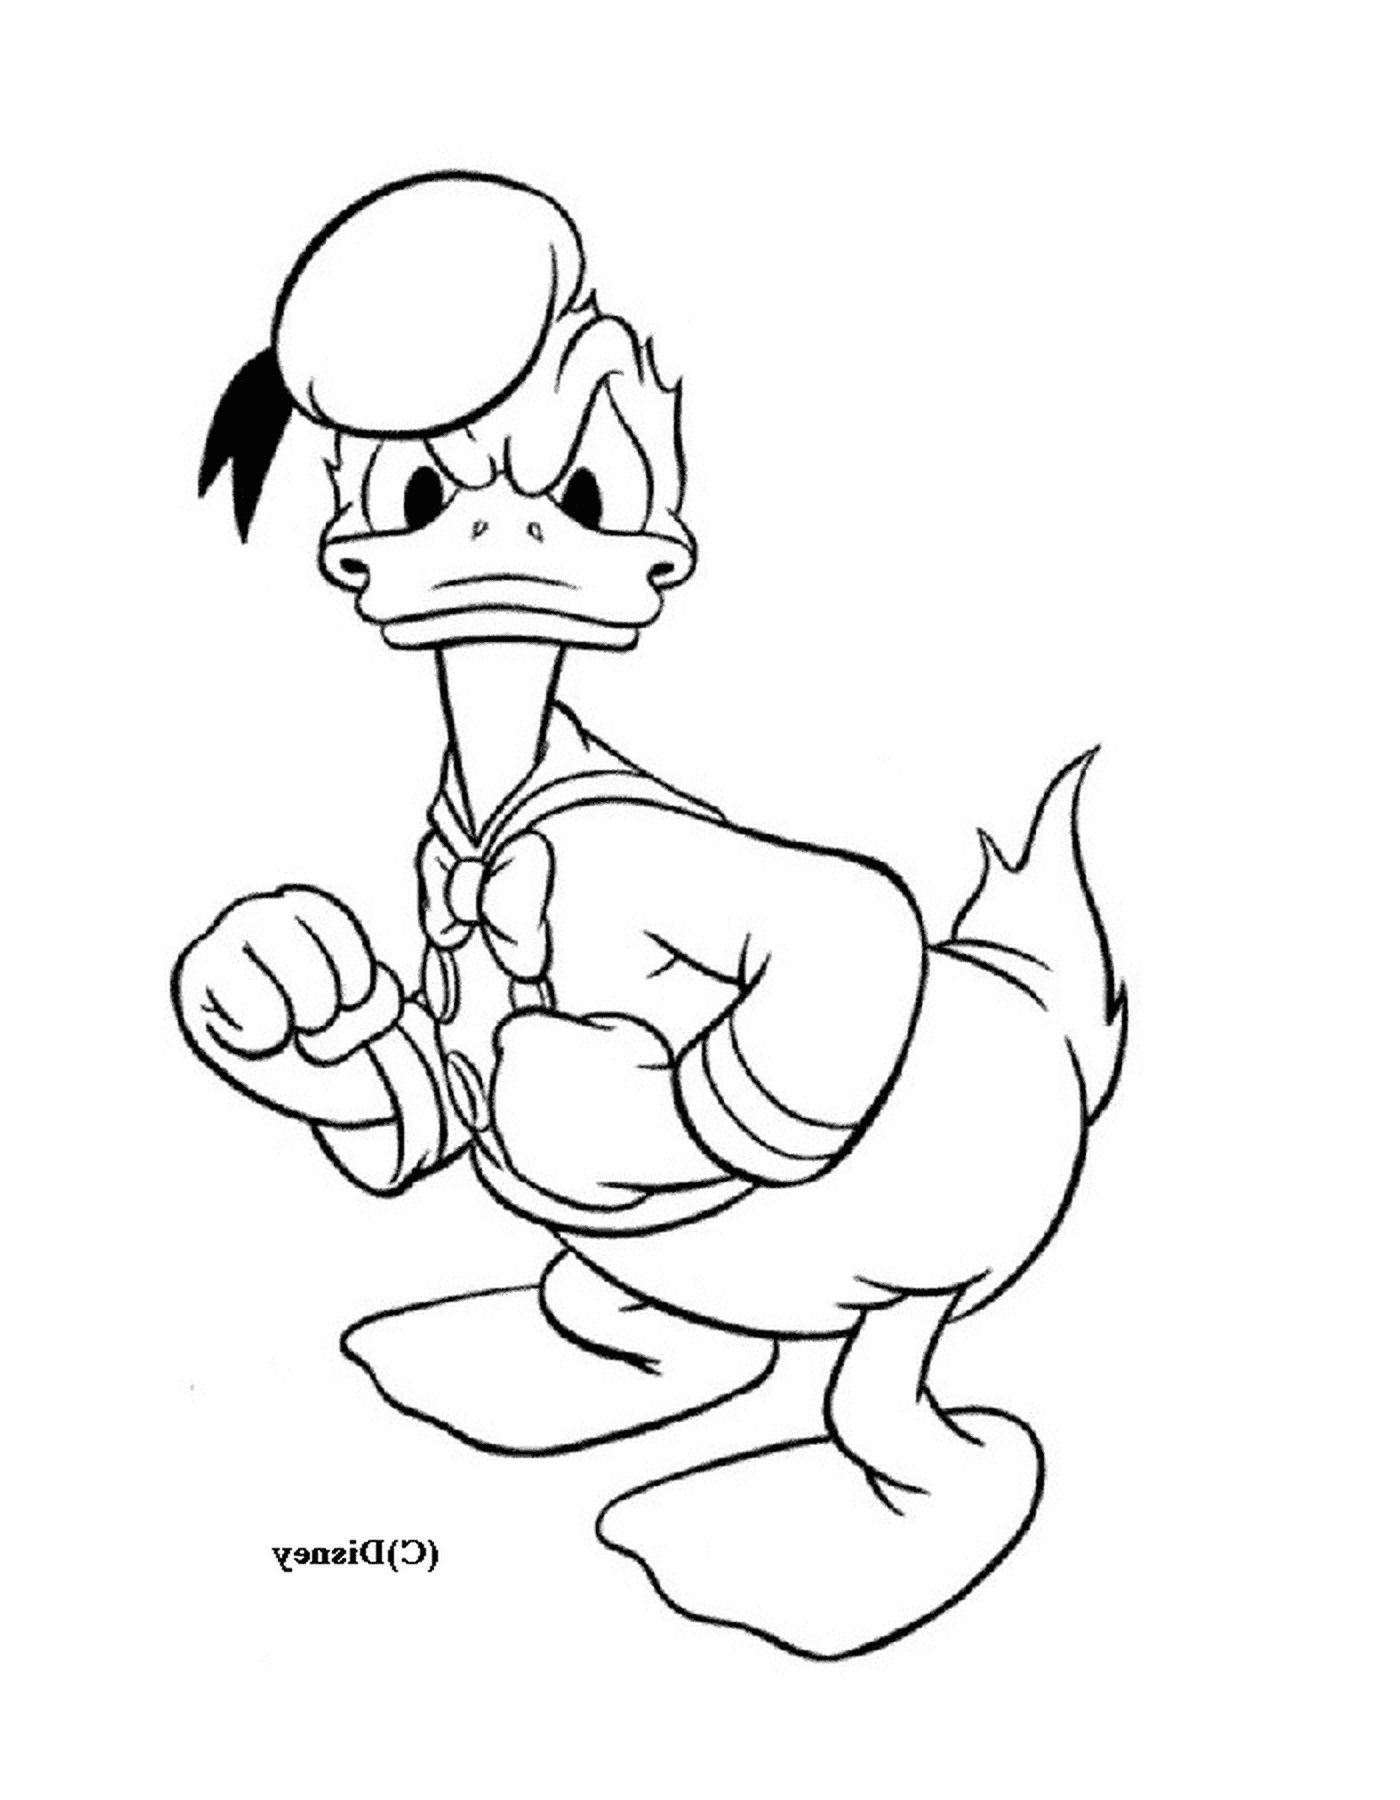  Donald Duck isn't happy 